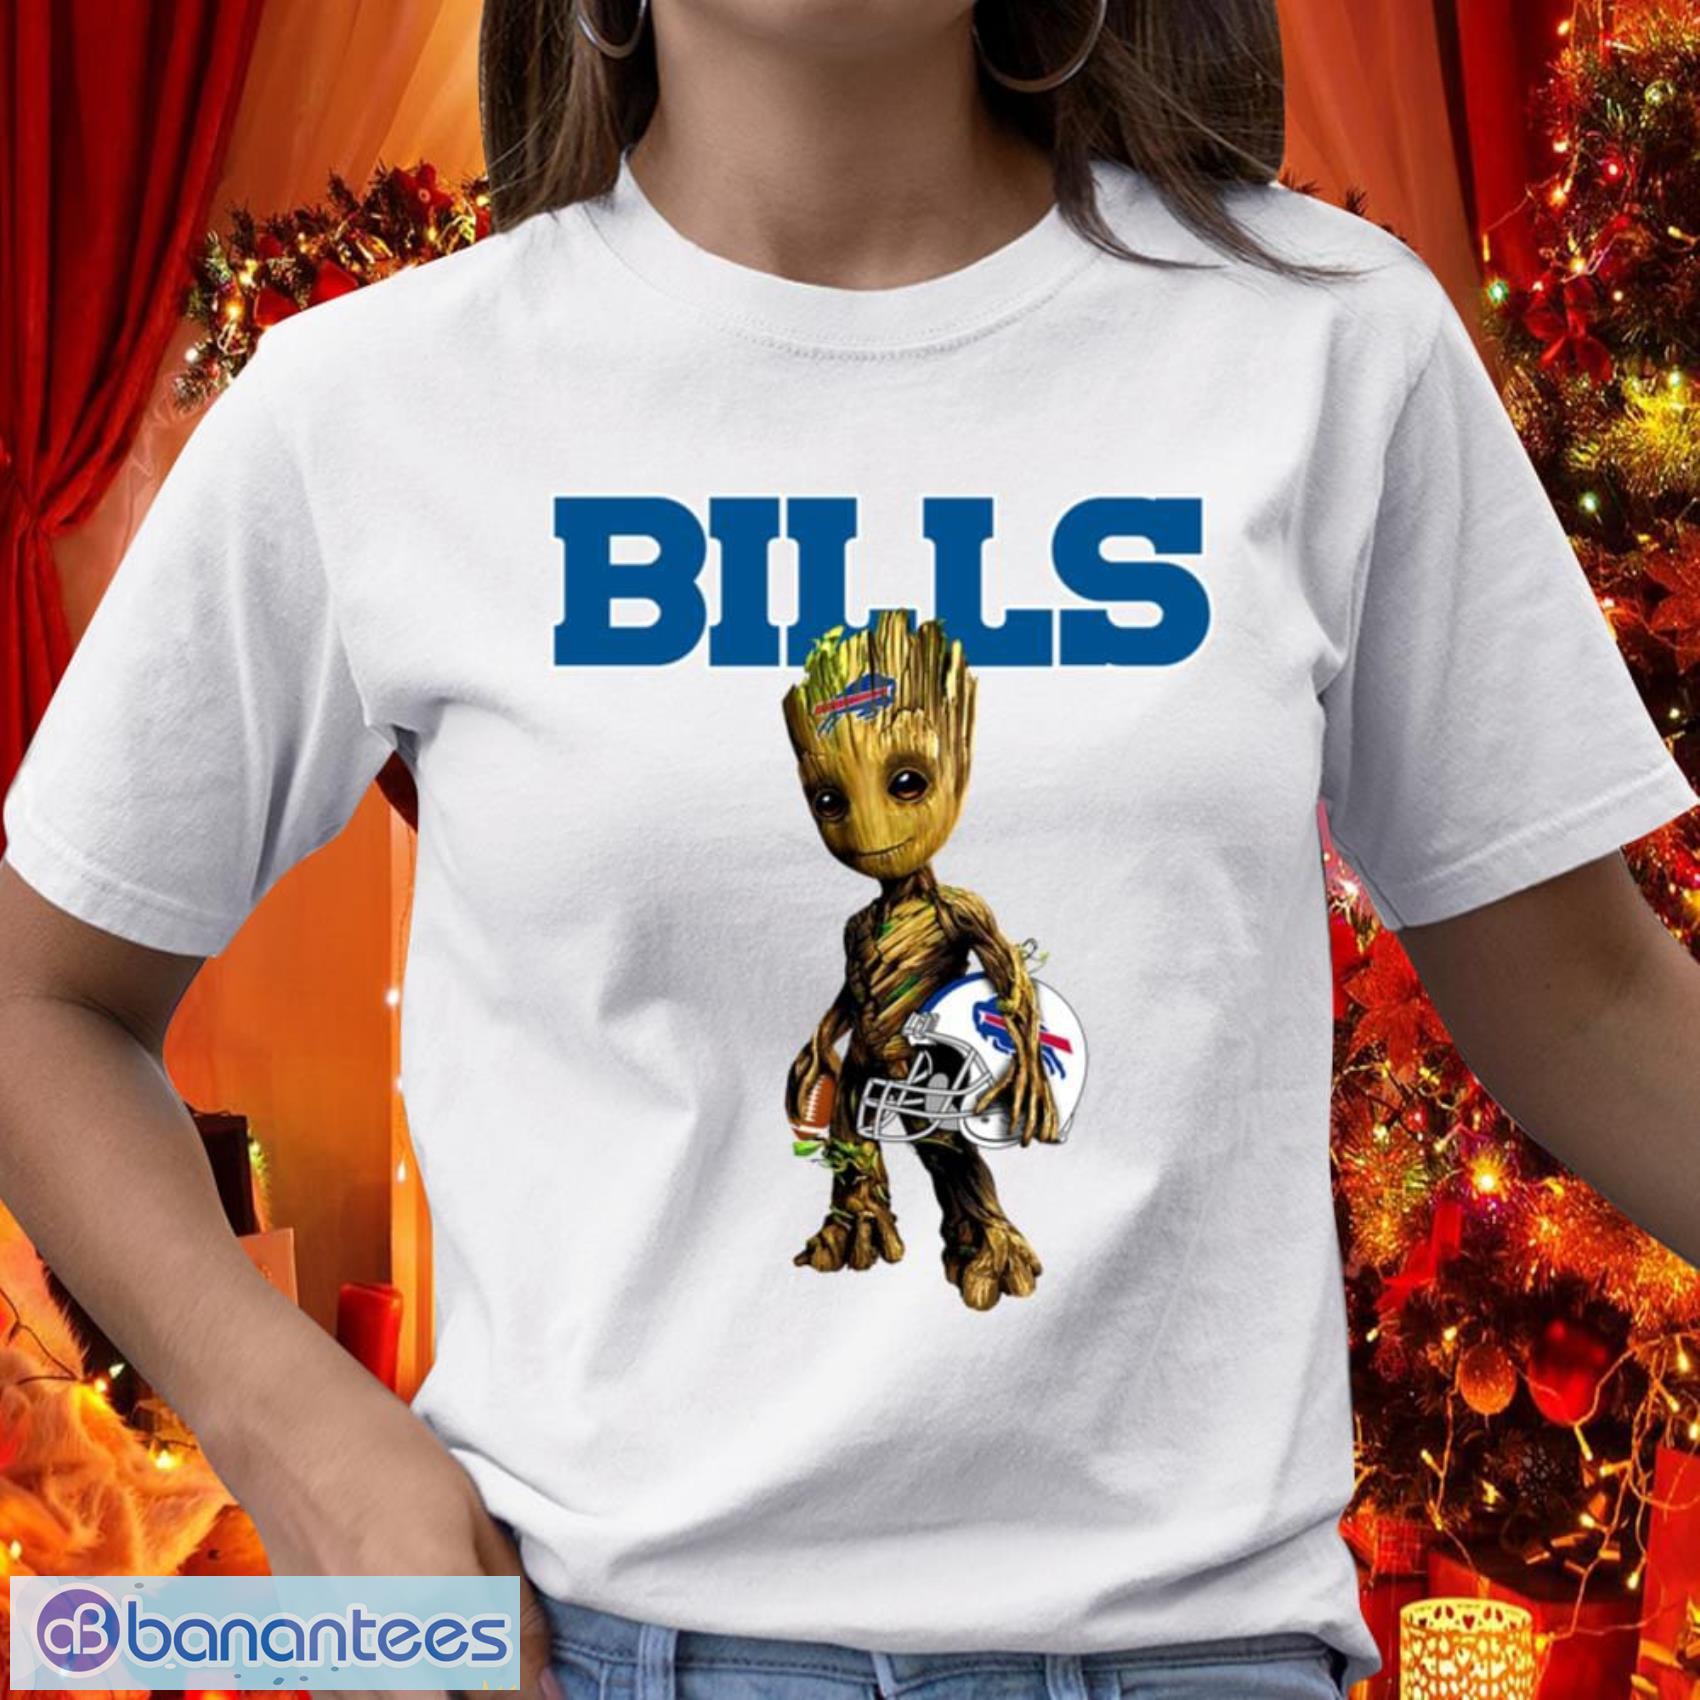 Buffalo Bills NFL Football Gift Fr Fans Groot Marvel Guardians Of The Galaxy T Shirt - Buffalo Bills NFL Football Groot Marvel Guardians Of The Galaxy T Shirt_1